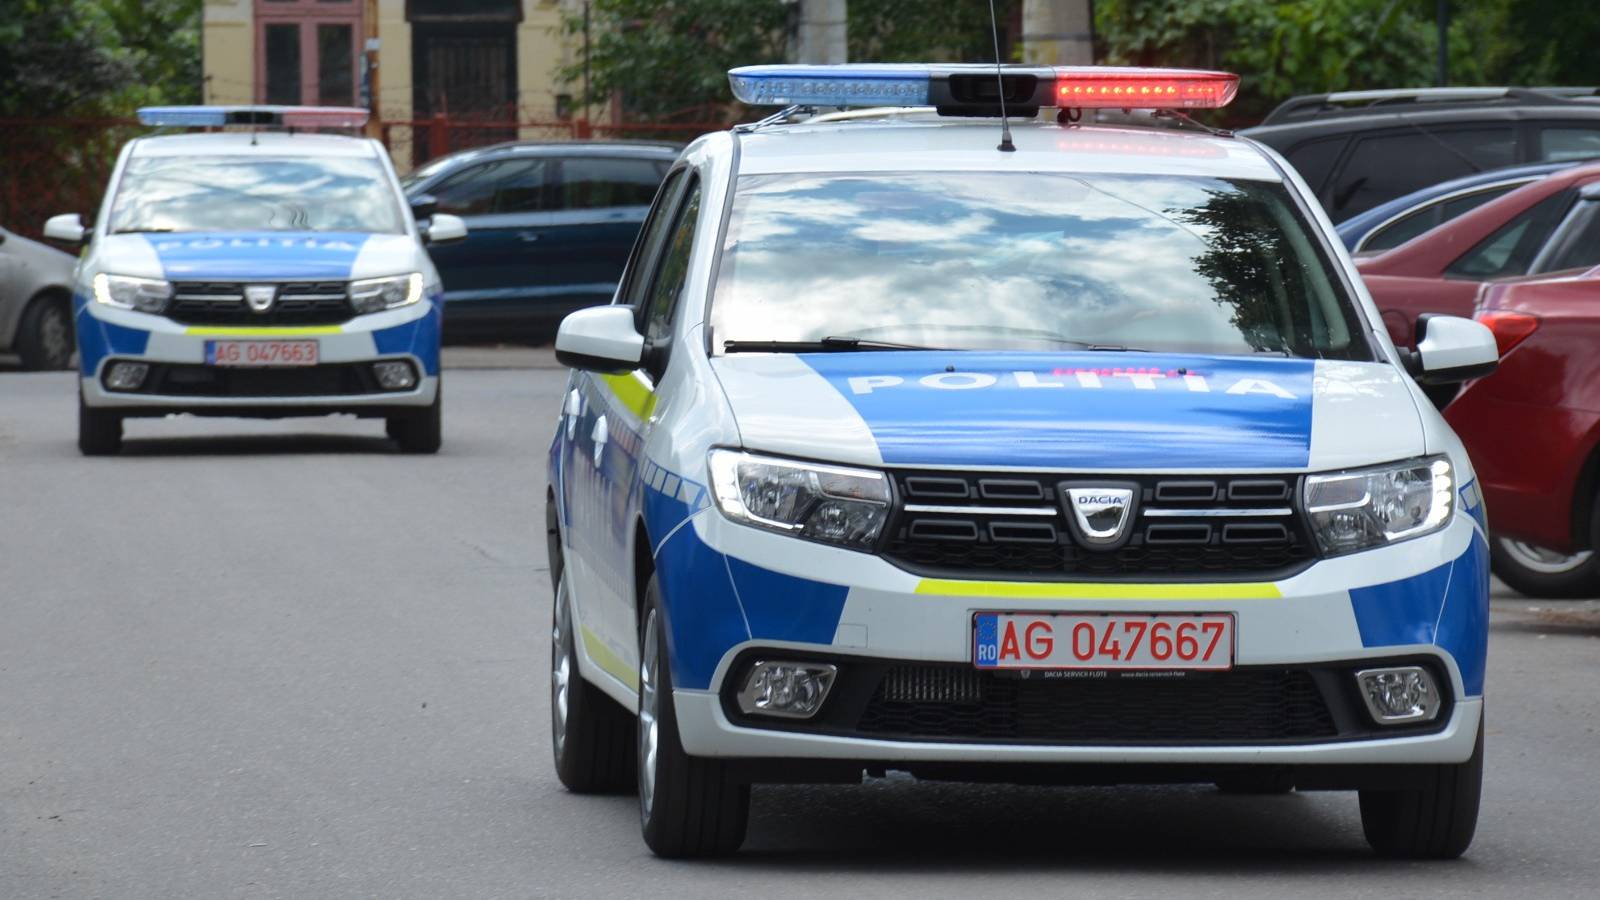 Warning of the Romanian police to radar drivers